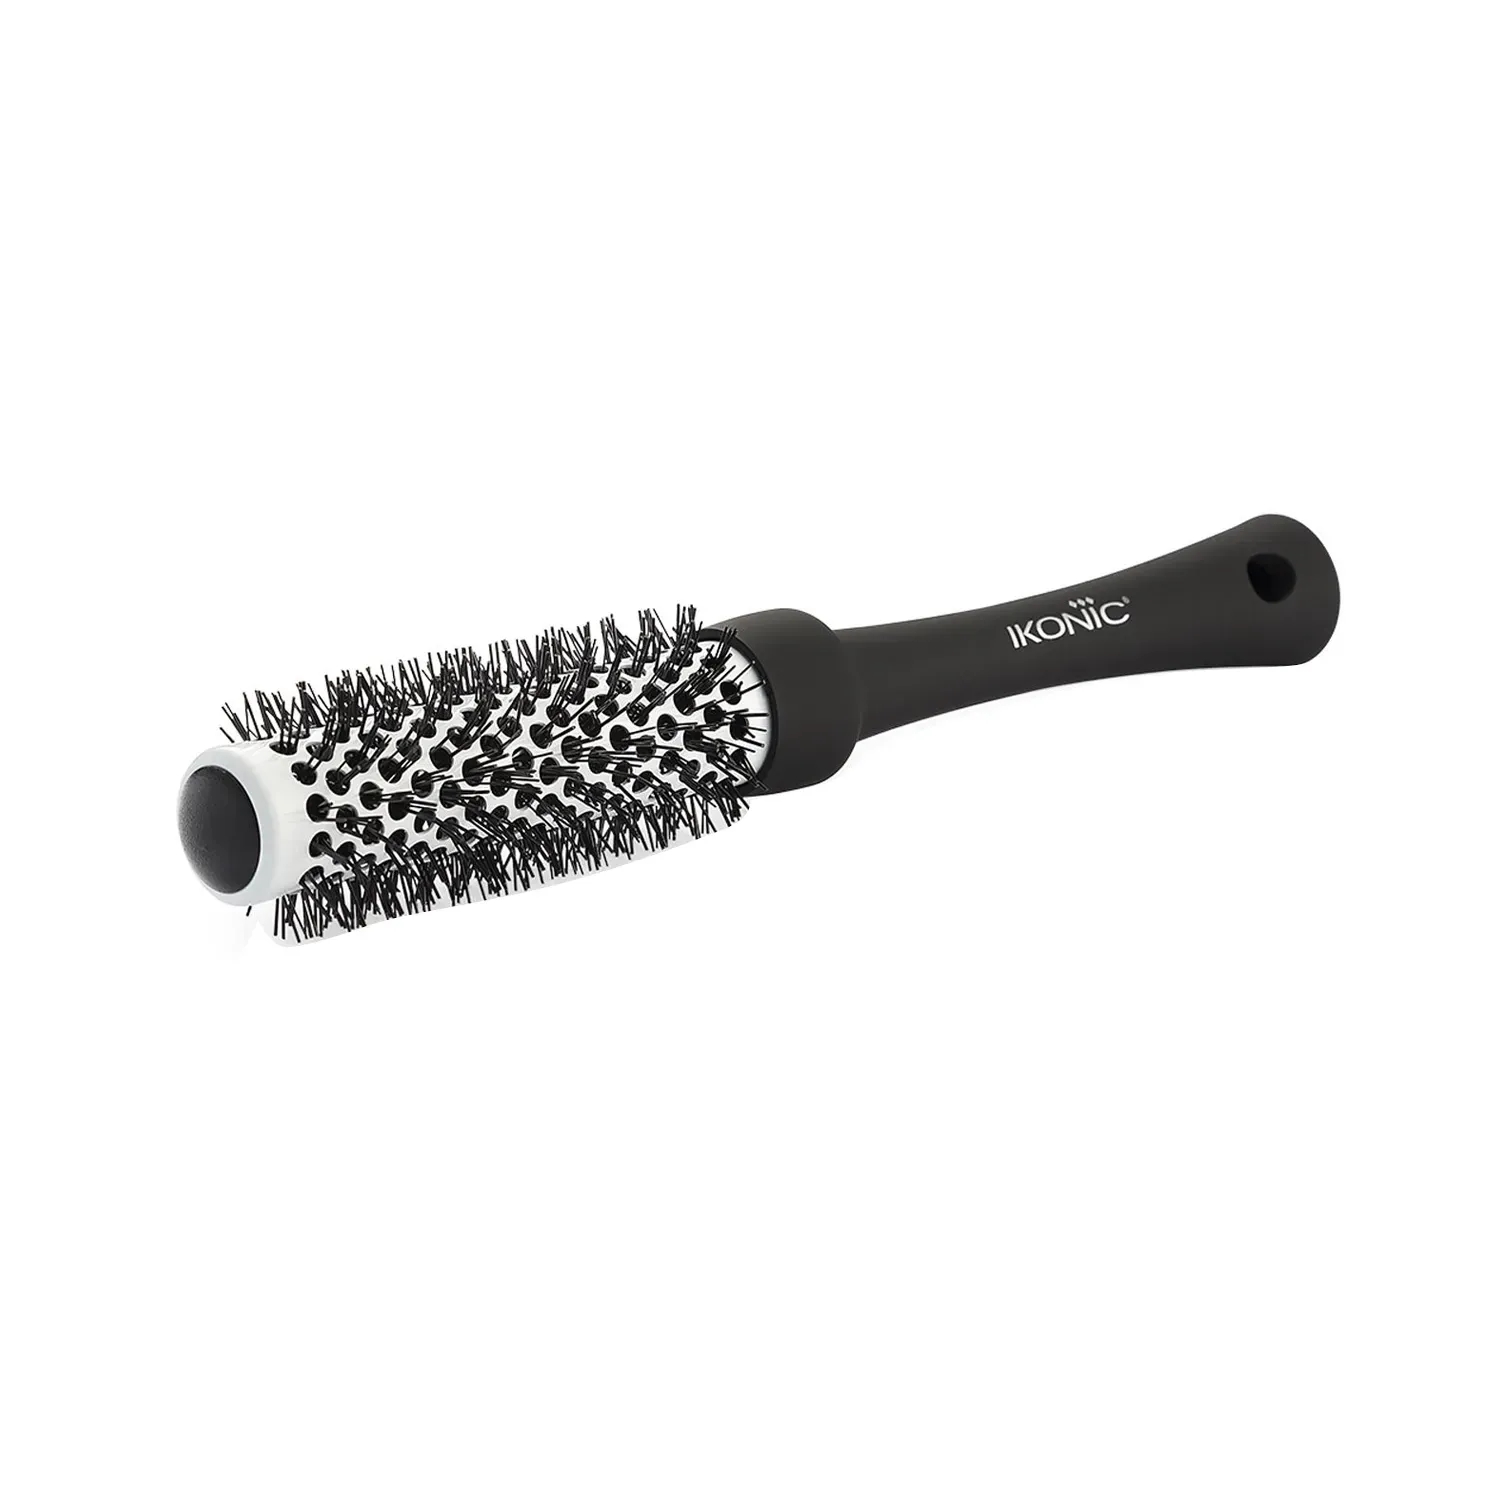 Ikonic Professional | Ikonic Professional Blow Dry Brush - BDB 25 (Black & Grey)